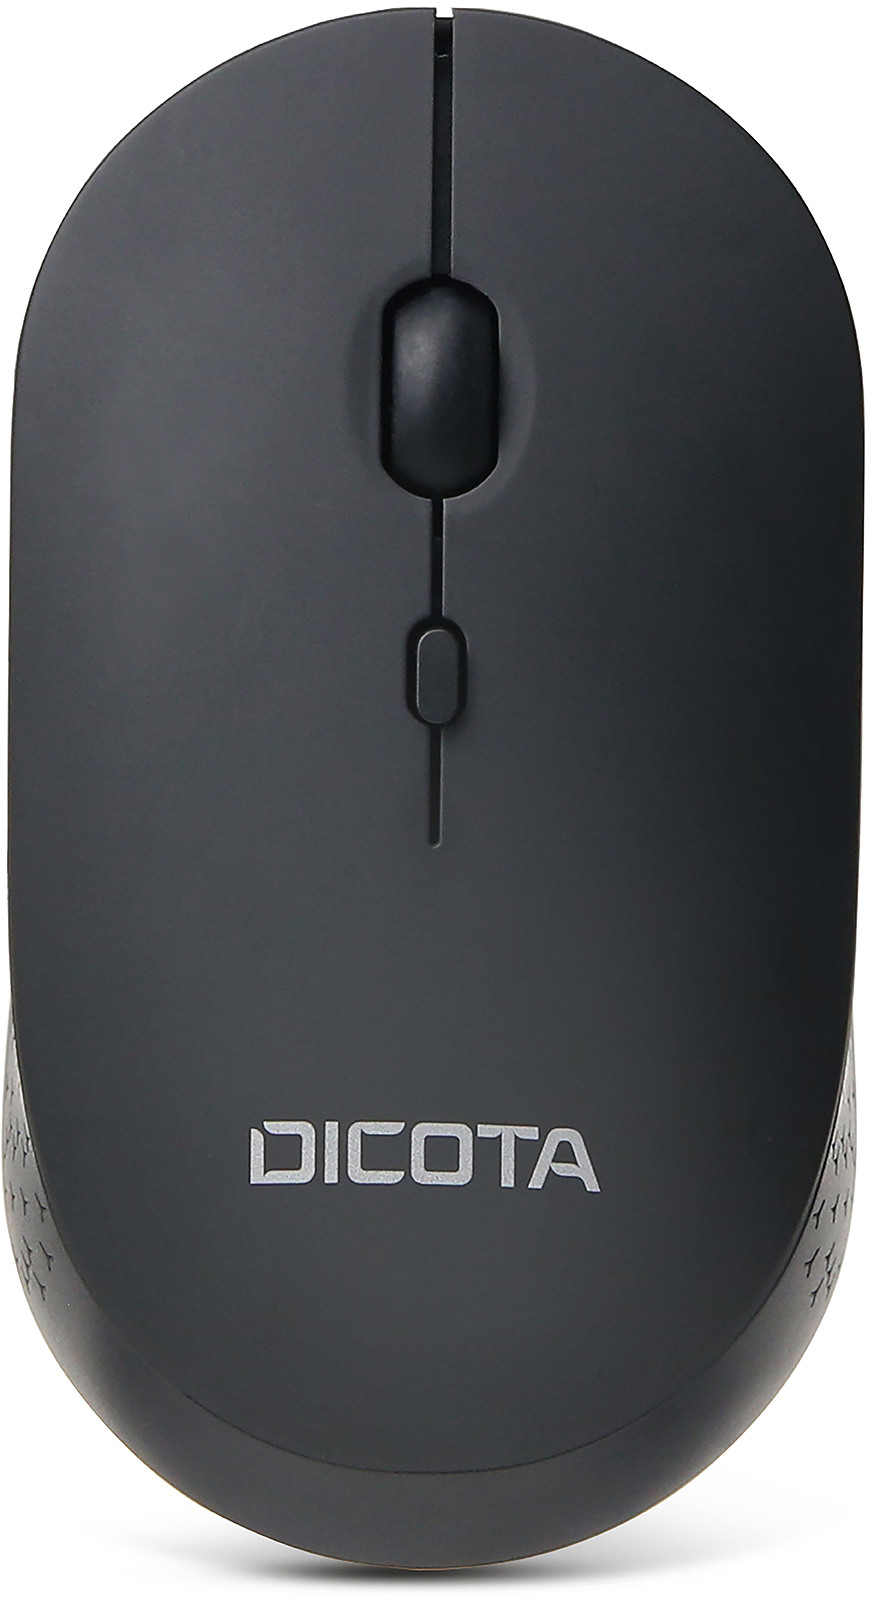 DICOTA Mouse Silent V2 D31980 Black